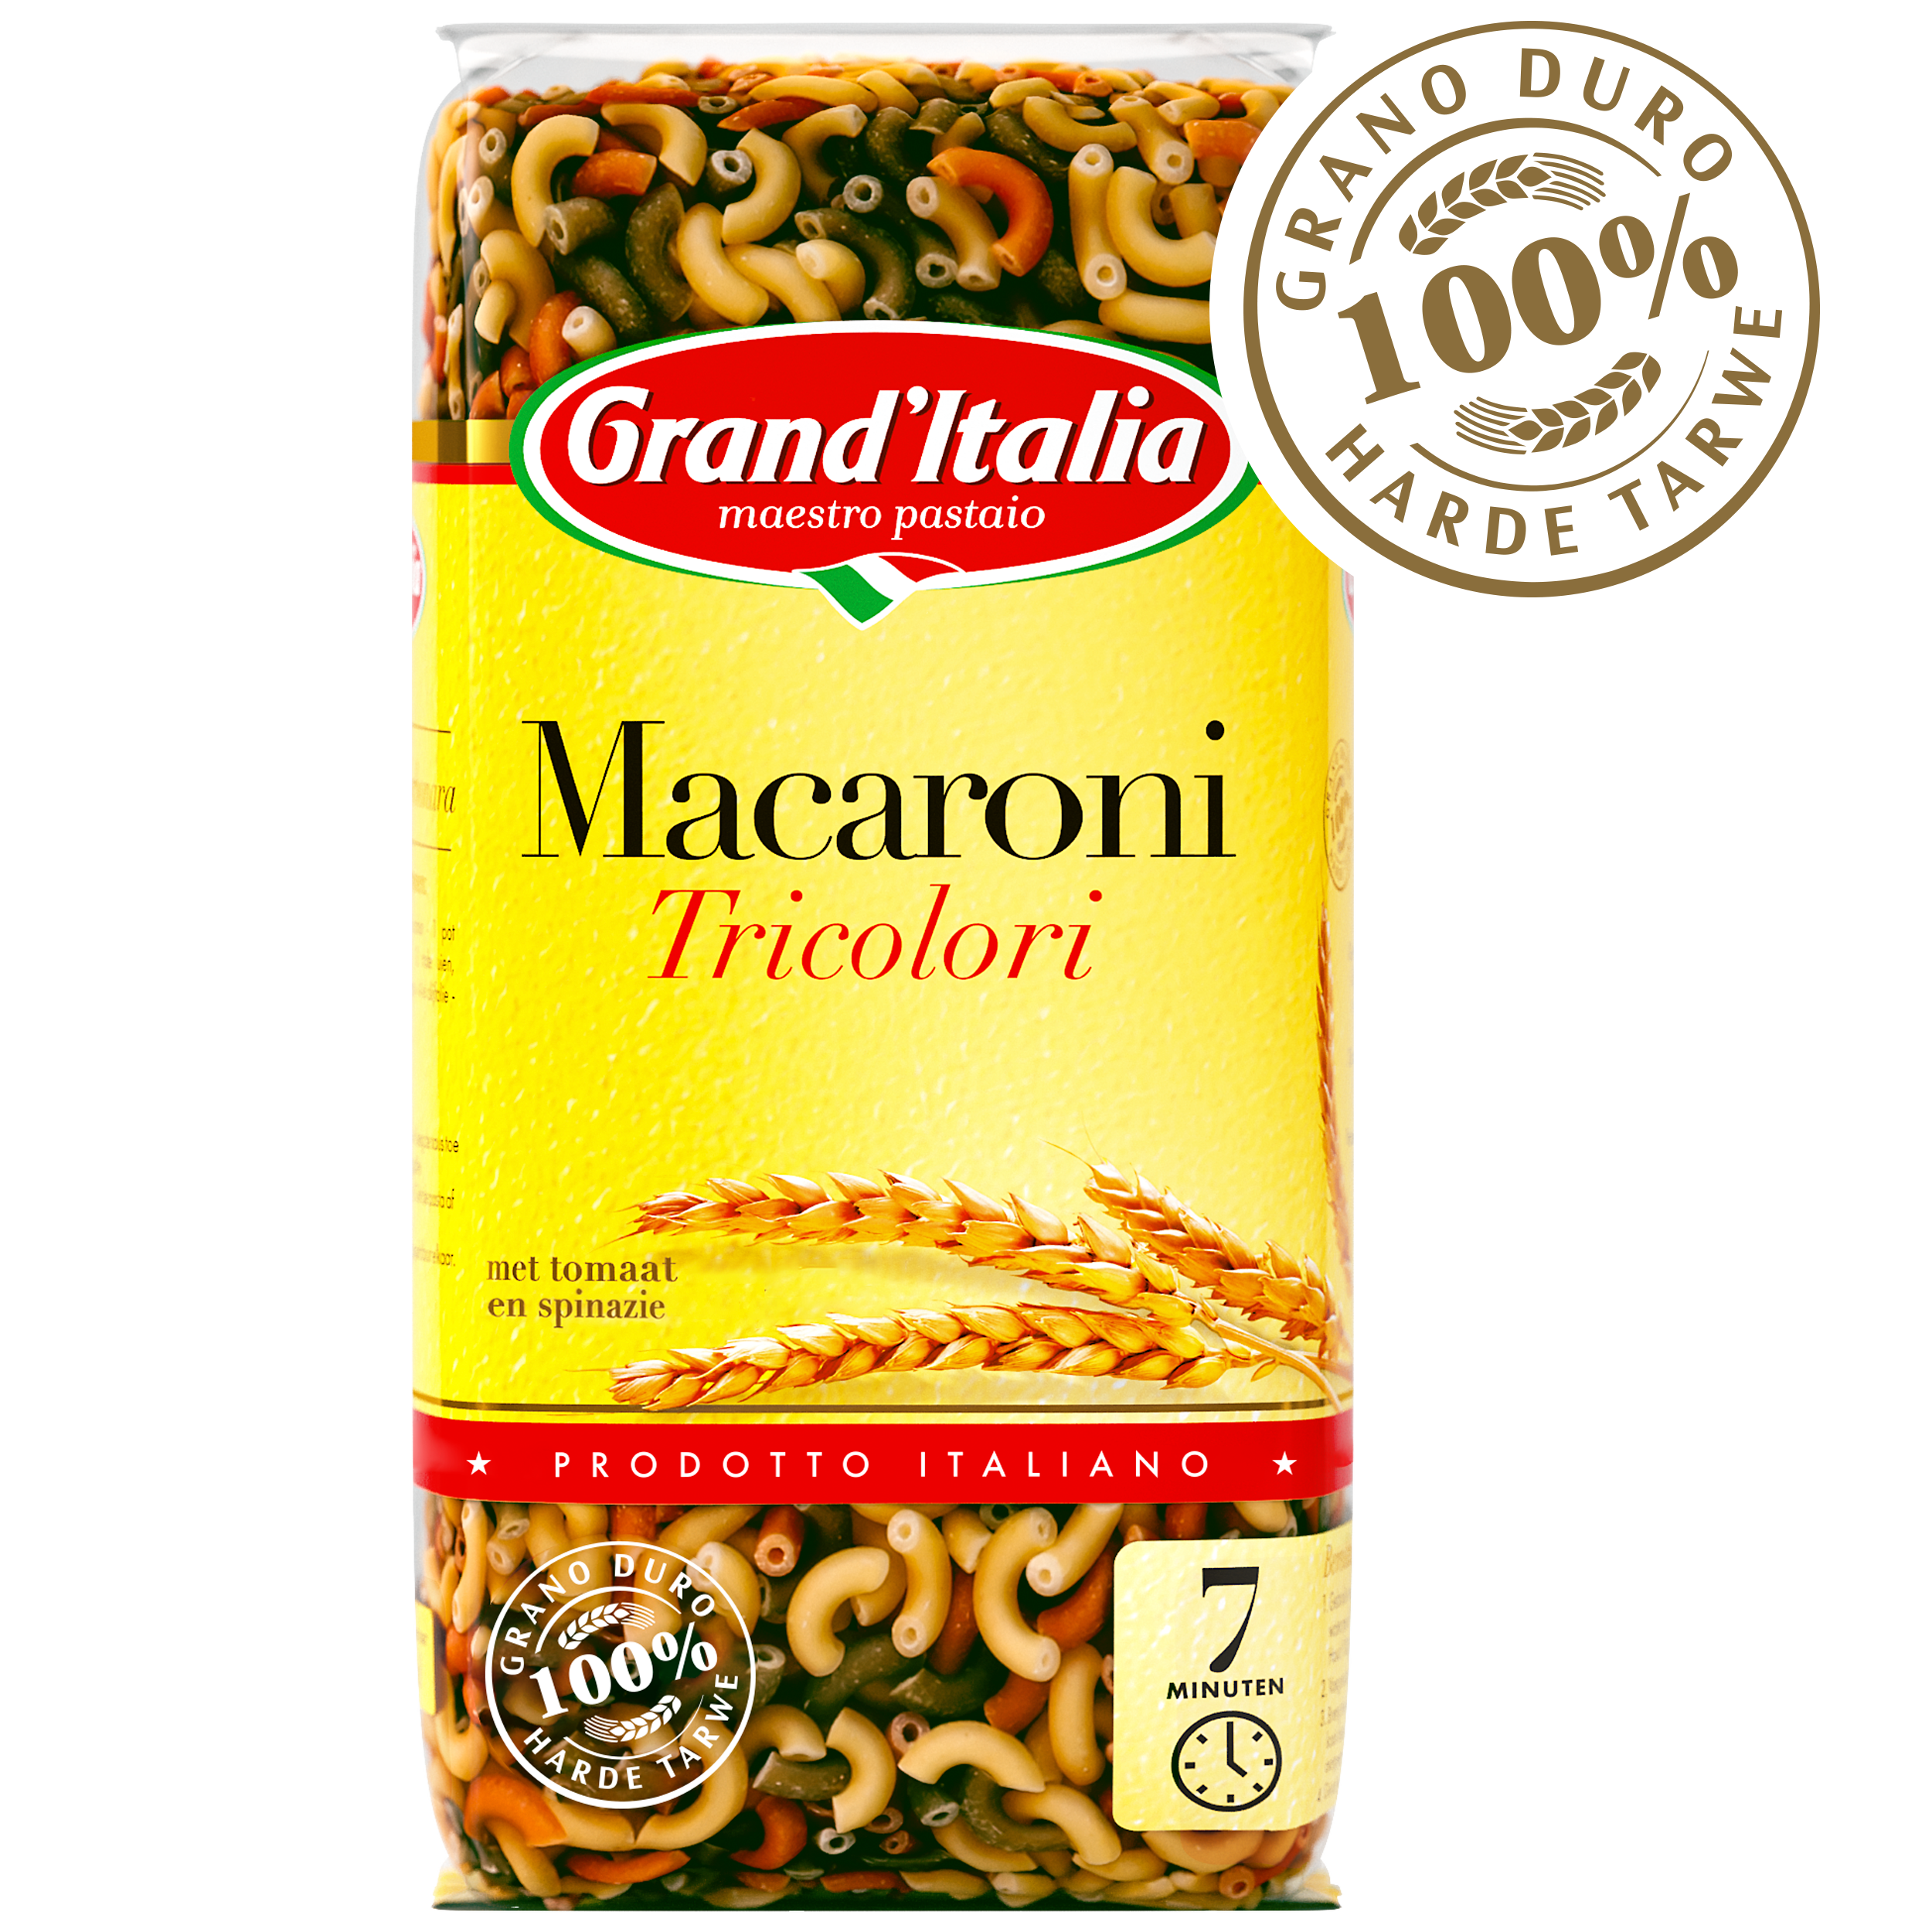 Pasta Macaroni Tricolori 500g claim Grand'Italia